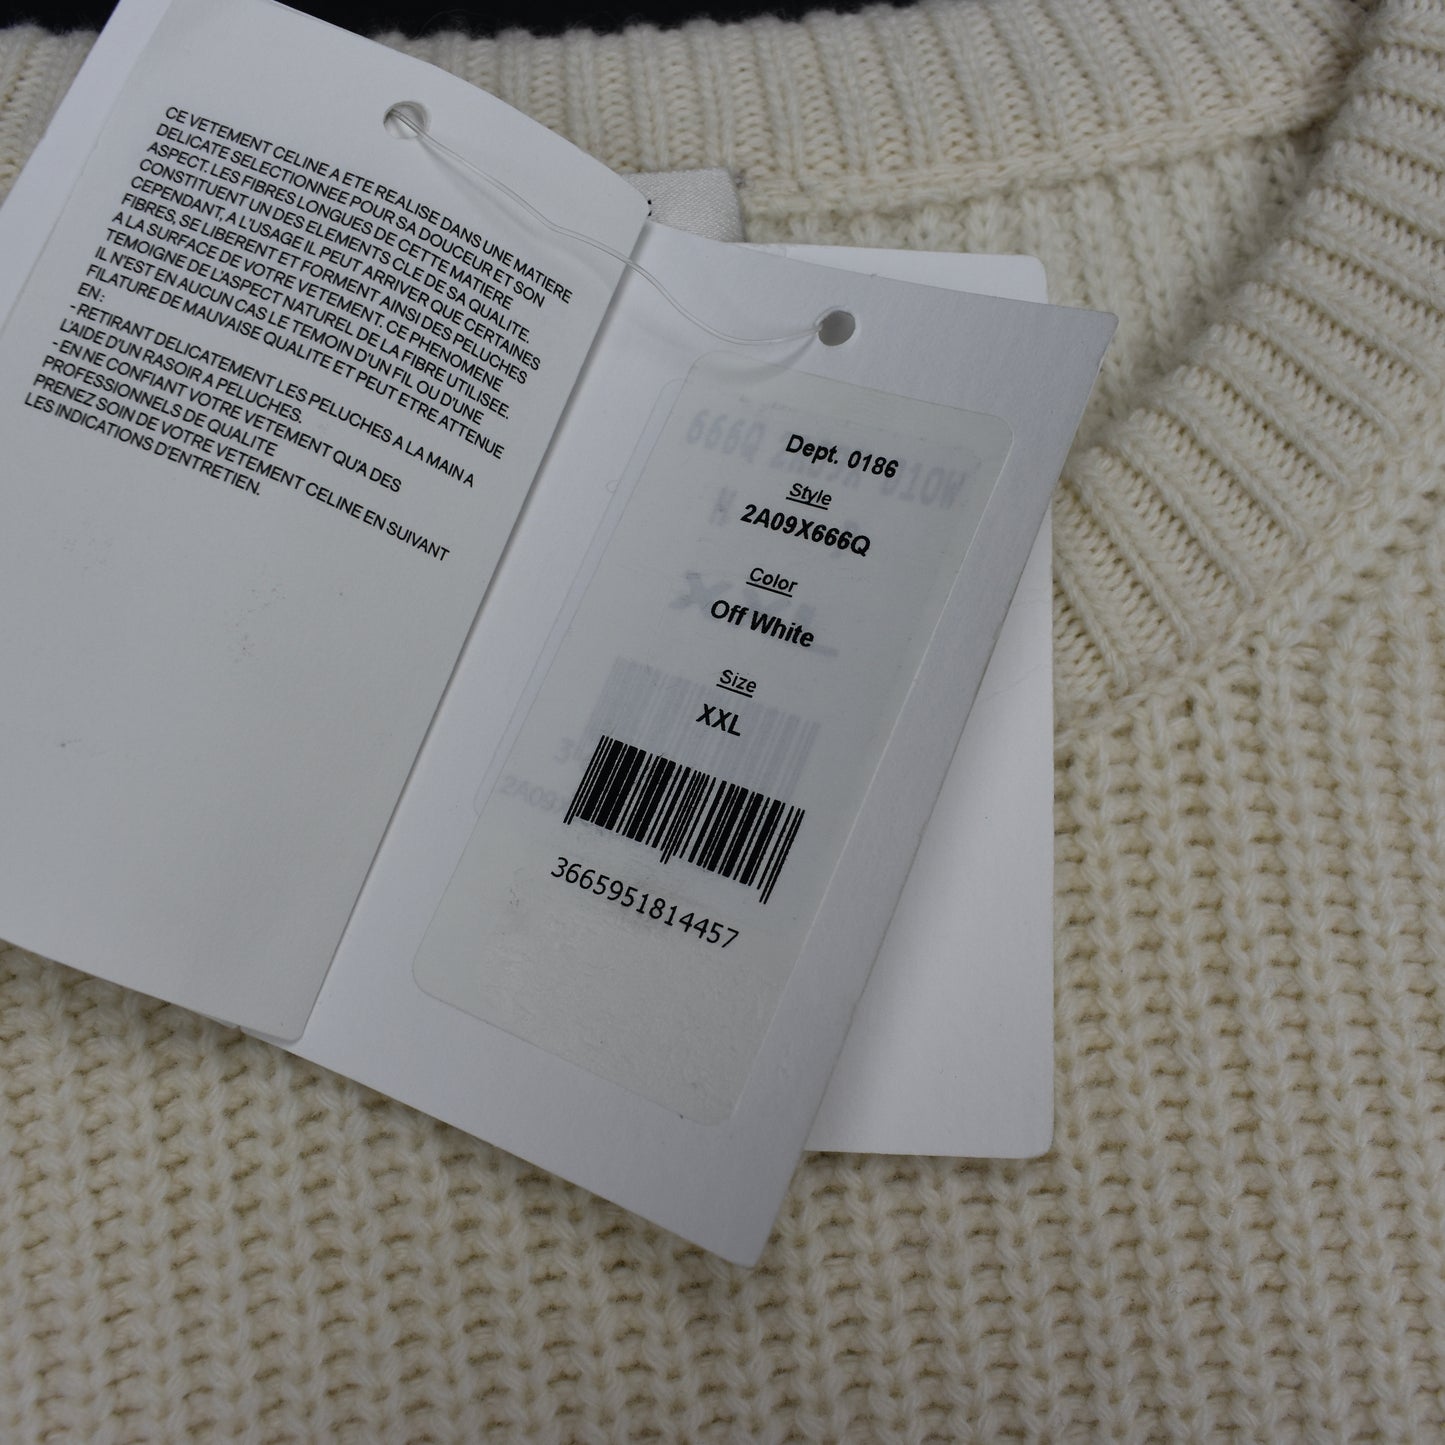 Celine - Cream Wool Sequin Logo Sweater